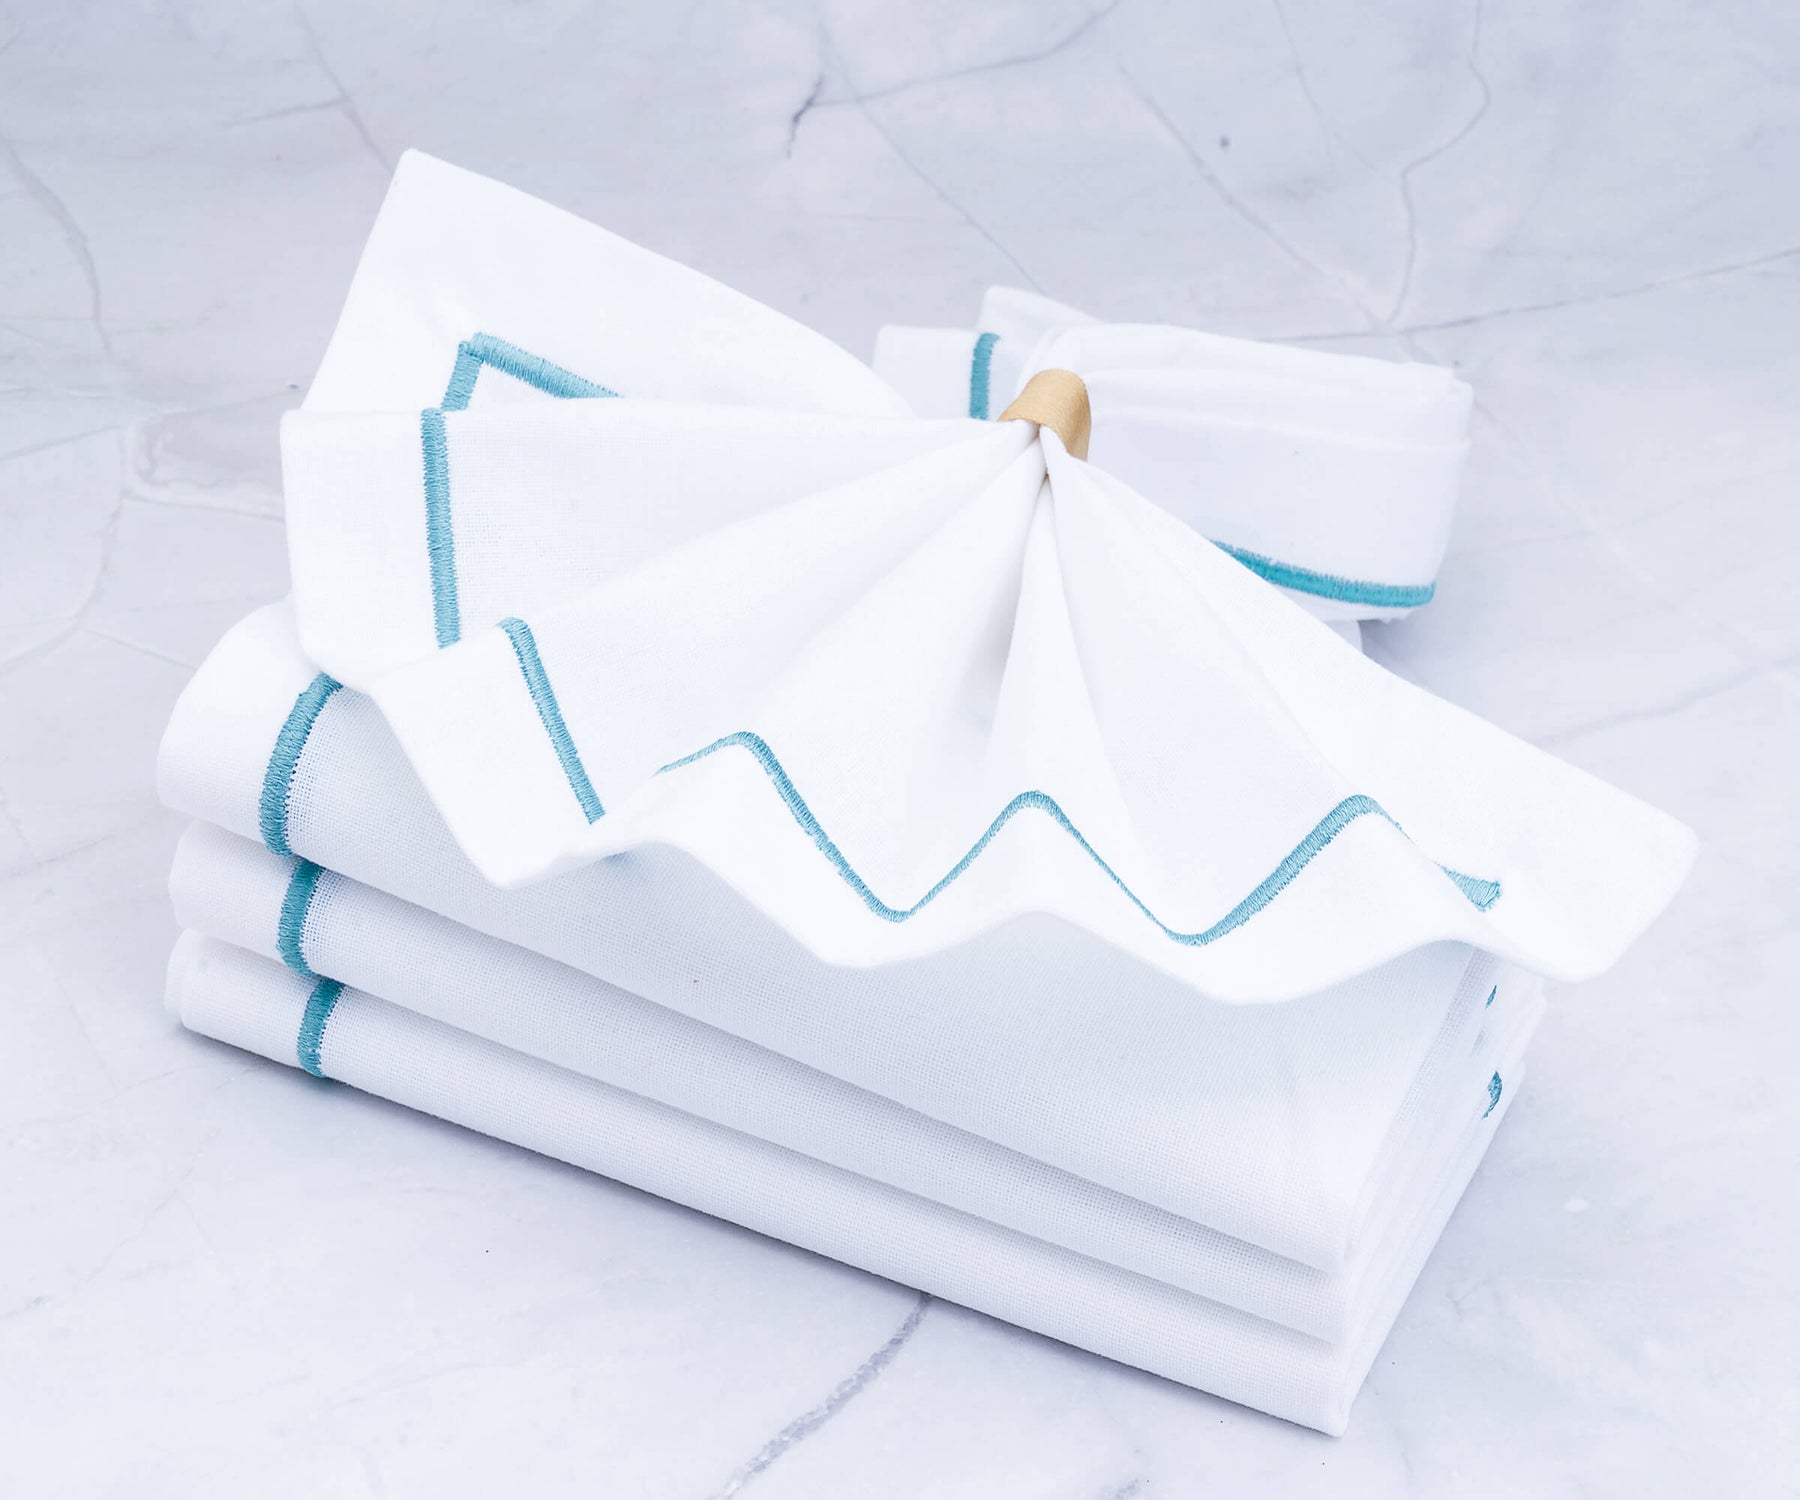 Pile of white dinner napkins with blue stripes